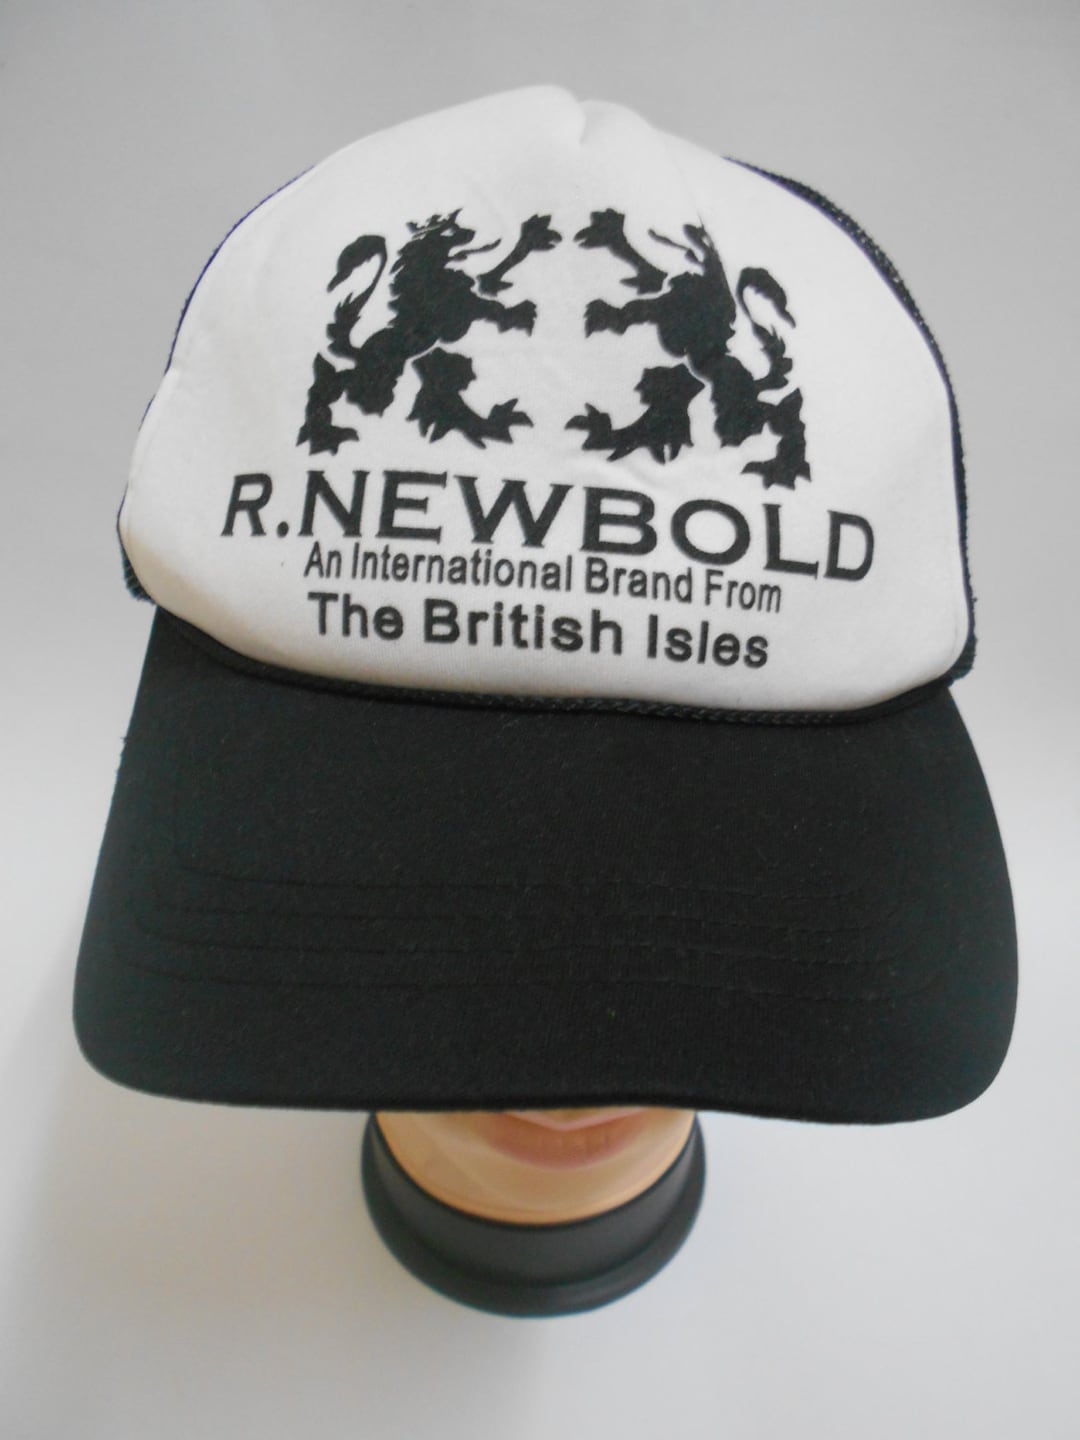 Vintage R.NEWBOLD Cap Hat, Snapbak Cap, International Brand From